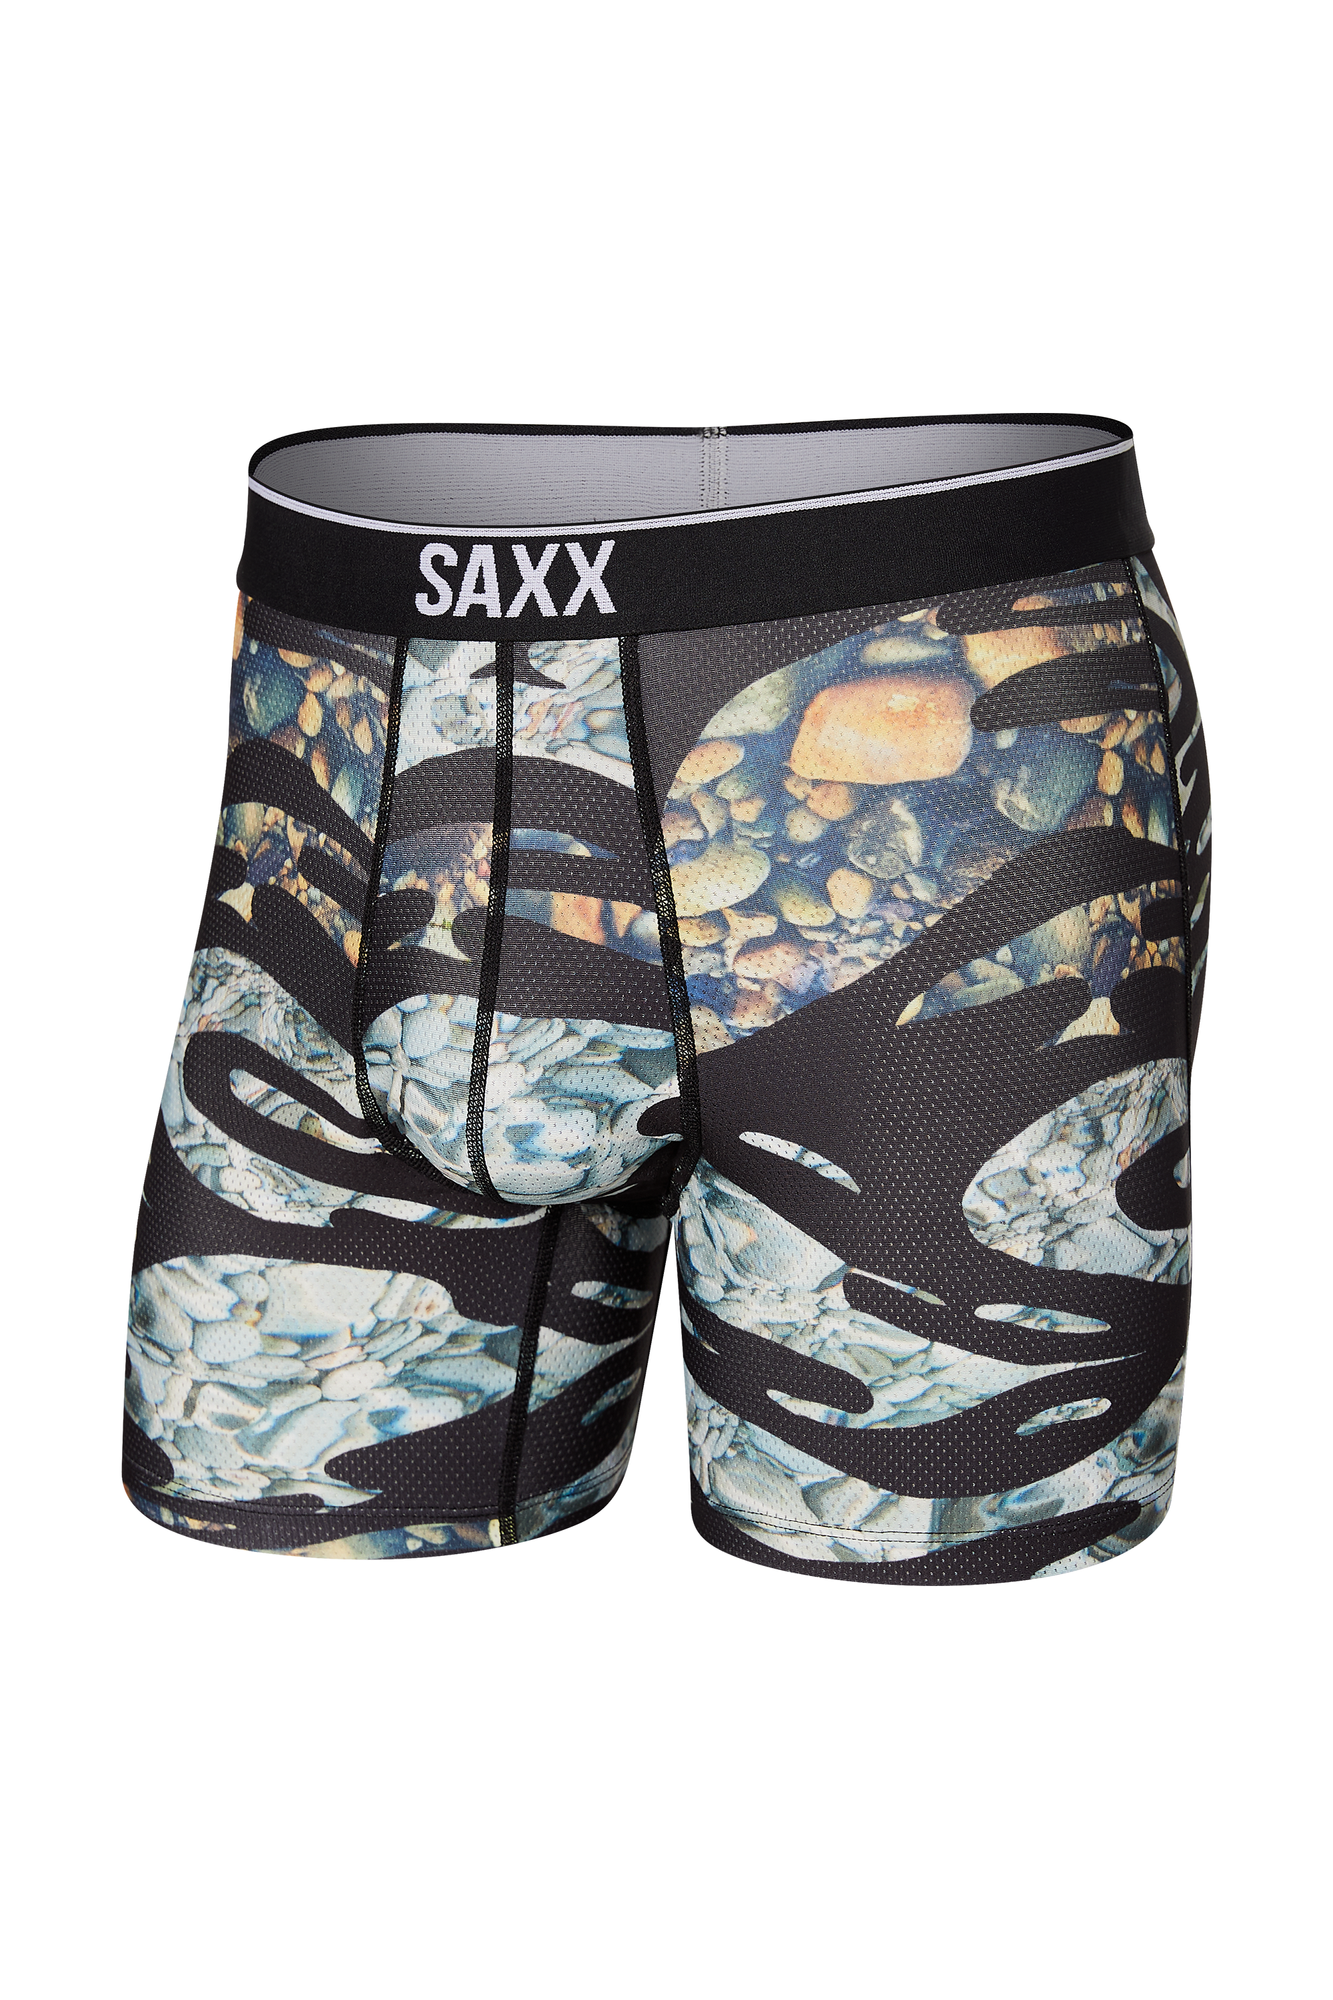 Saxx Vibe Boxer Brief - Style SXBM35-BU6